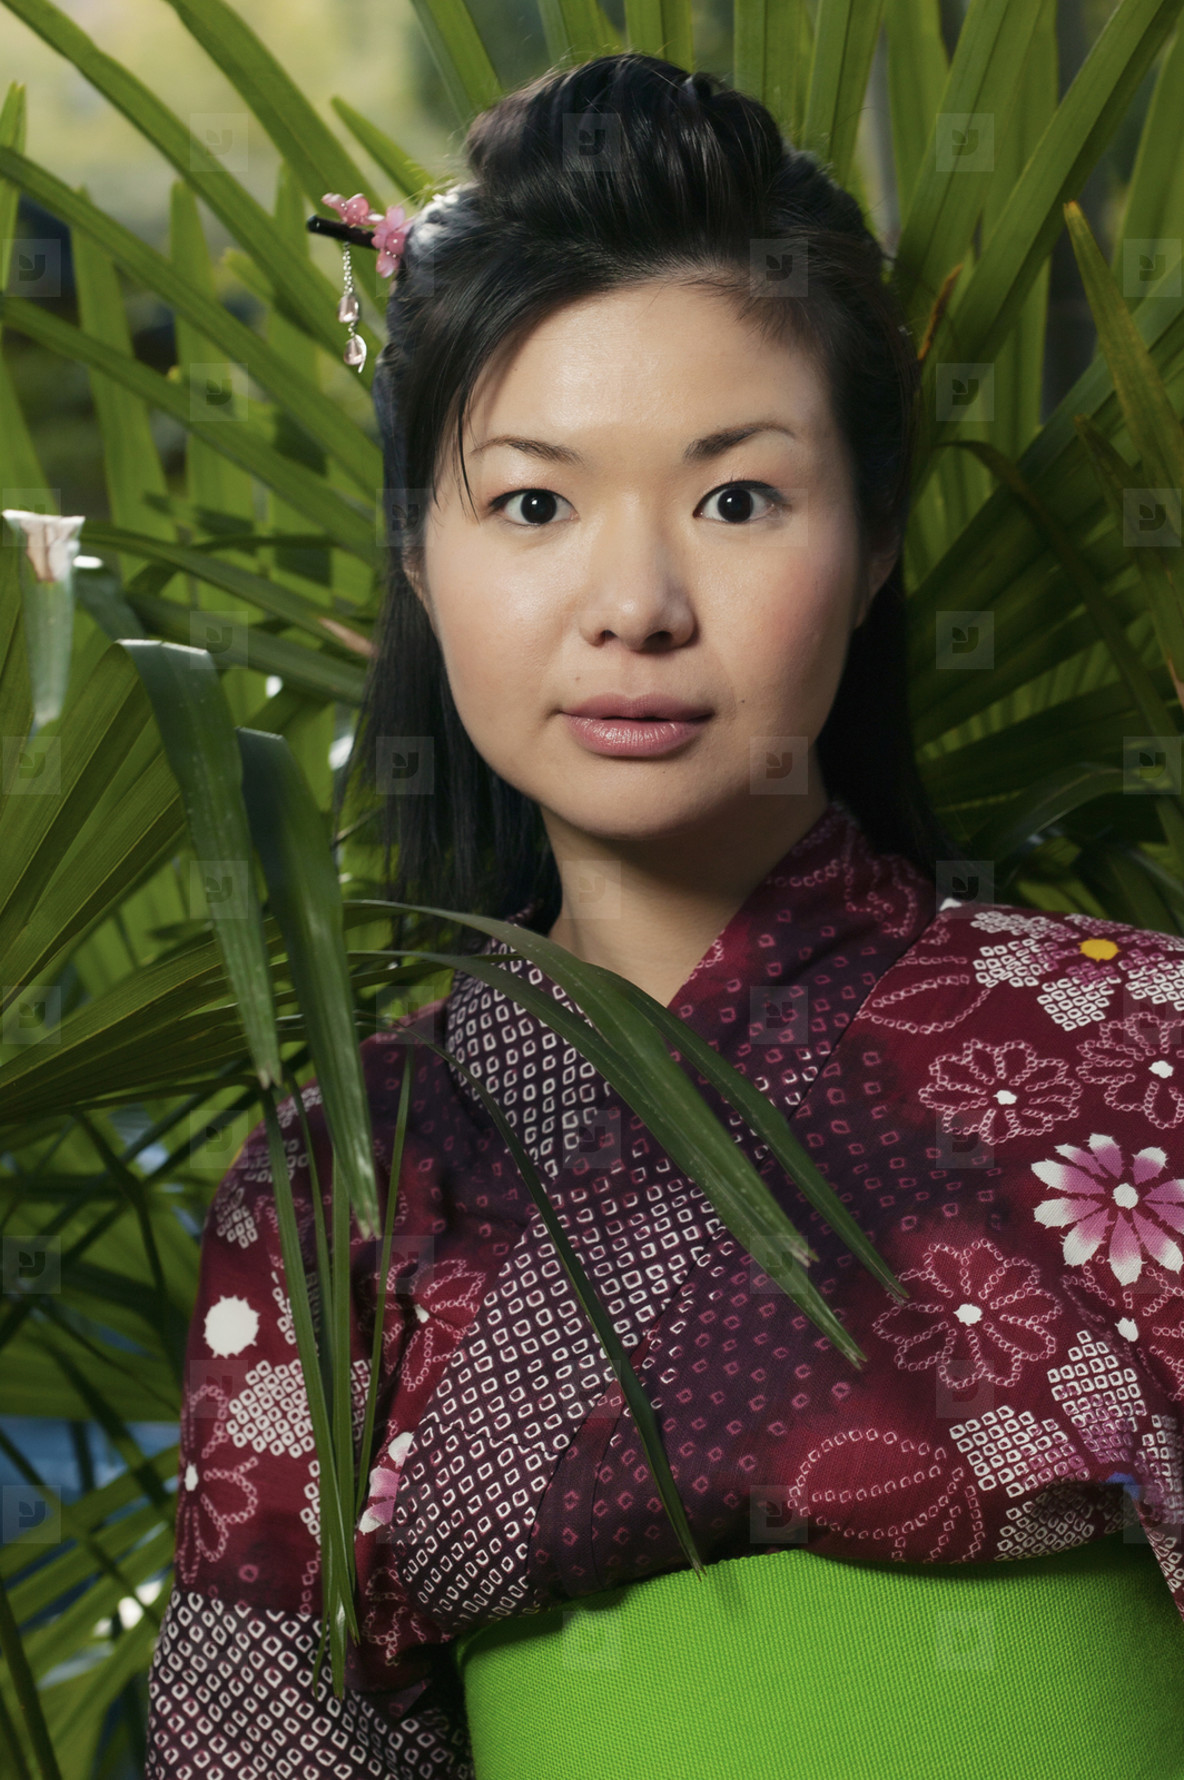 Portrait beautiful young woman in kimono among plants